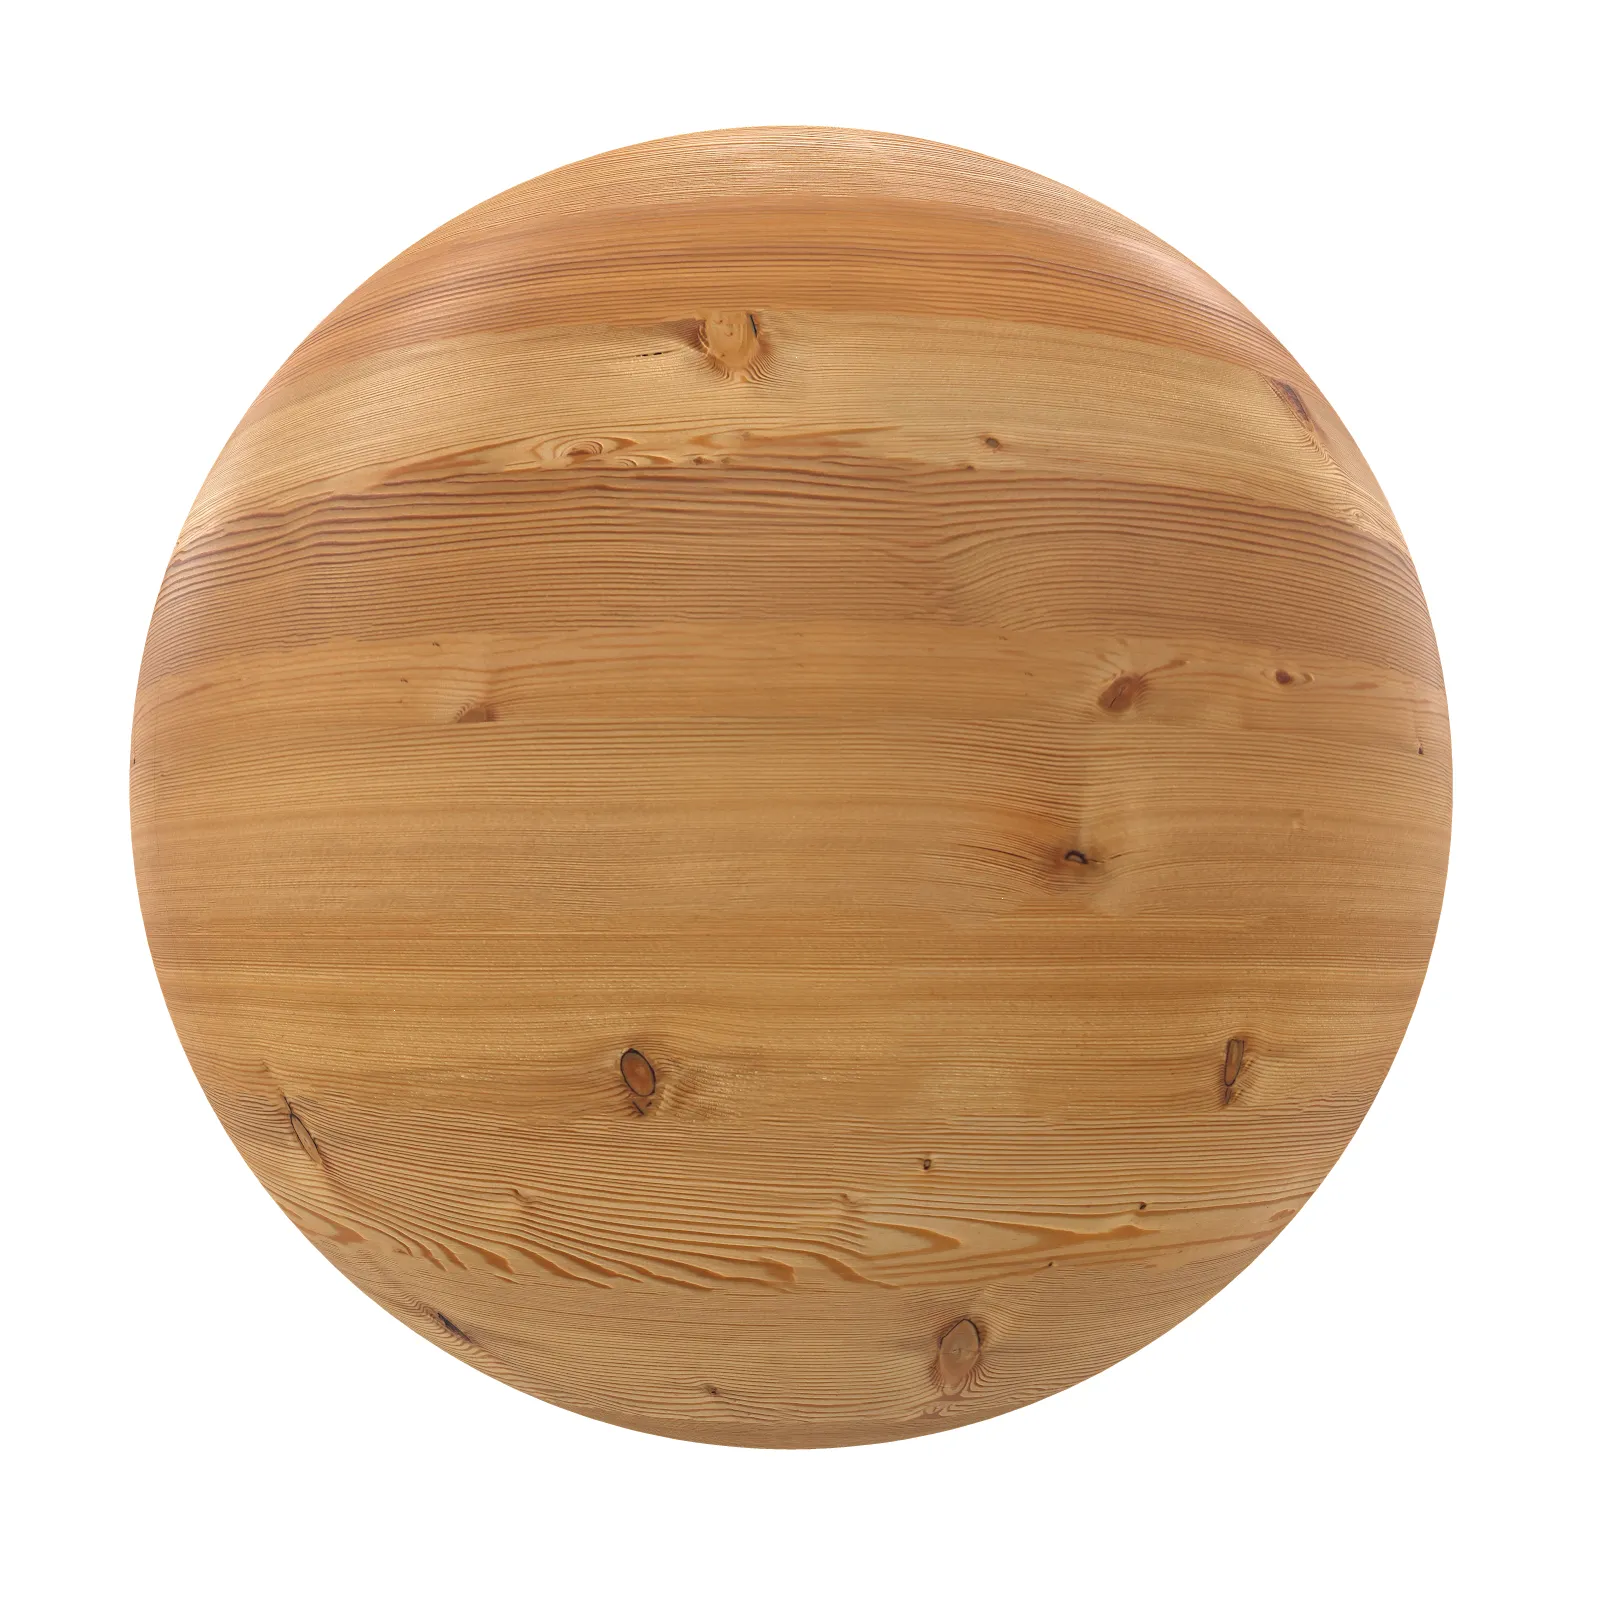 3ds Max Files – Texture – 8 – Wood Texture – 96 – Wood Texture by Minh Nguyen